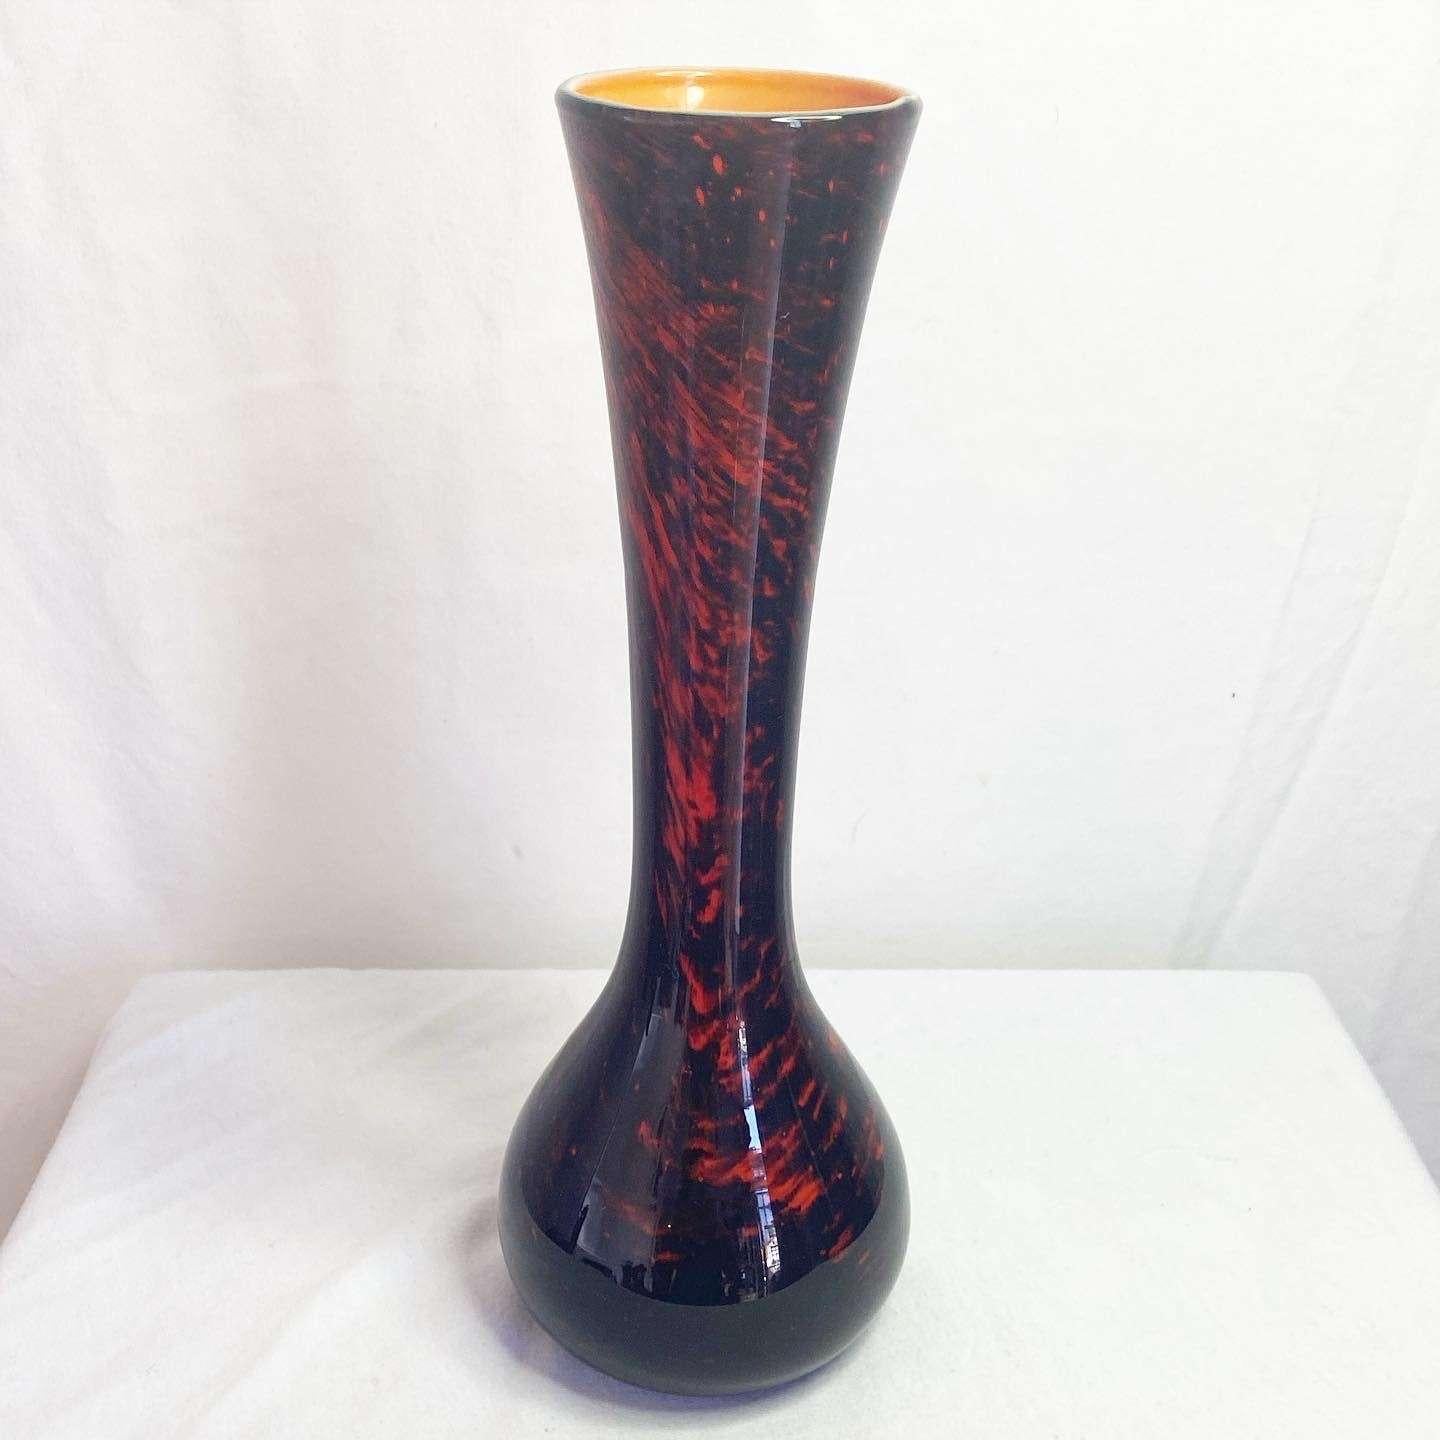 Postmoderne Vintage-Keramikvase in Schwarz, Rot und Orange